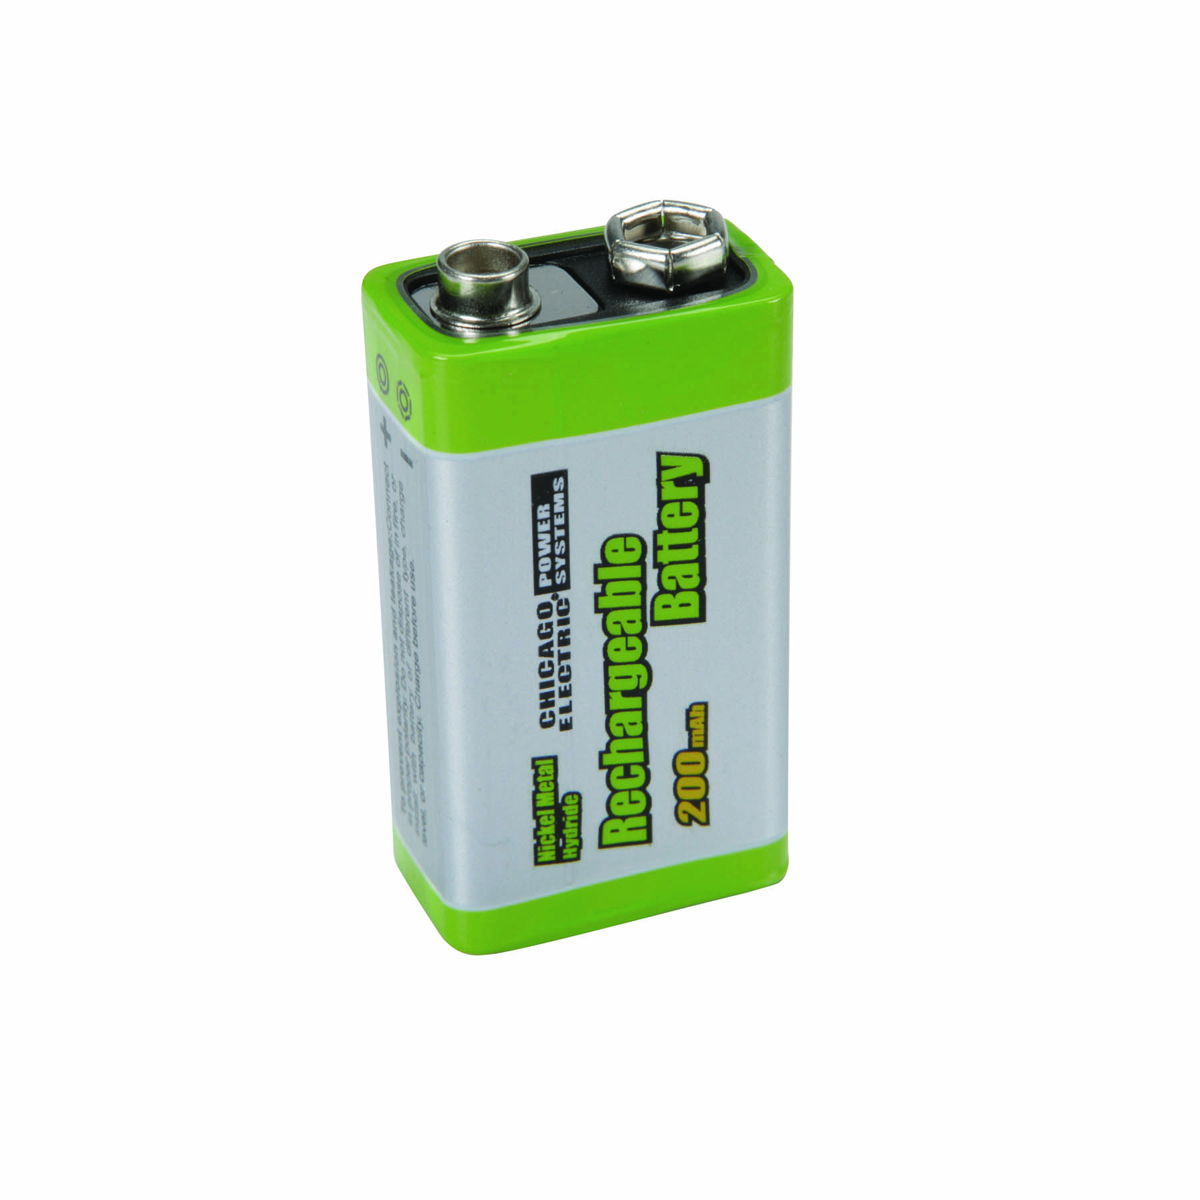 THUNDERBOLT 9V 200 mAh High Capacity NiMH Rechargeable Battery Pk. - Item 97865